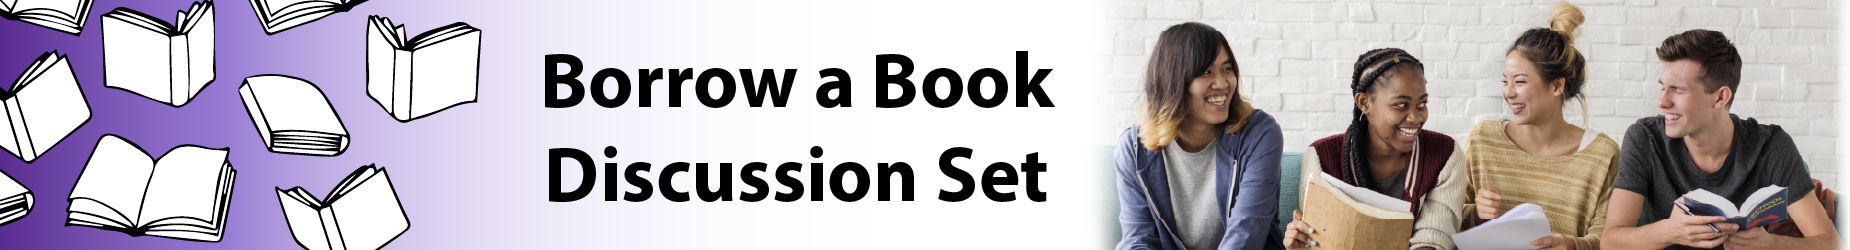 Borrow a Book Discussion Set logo